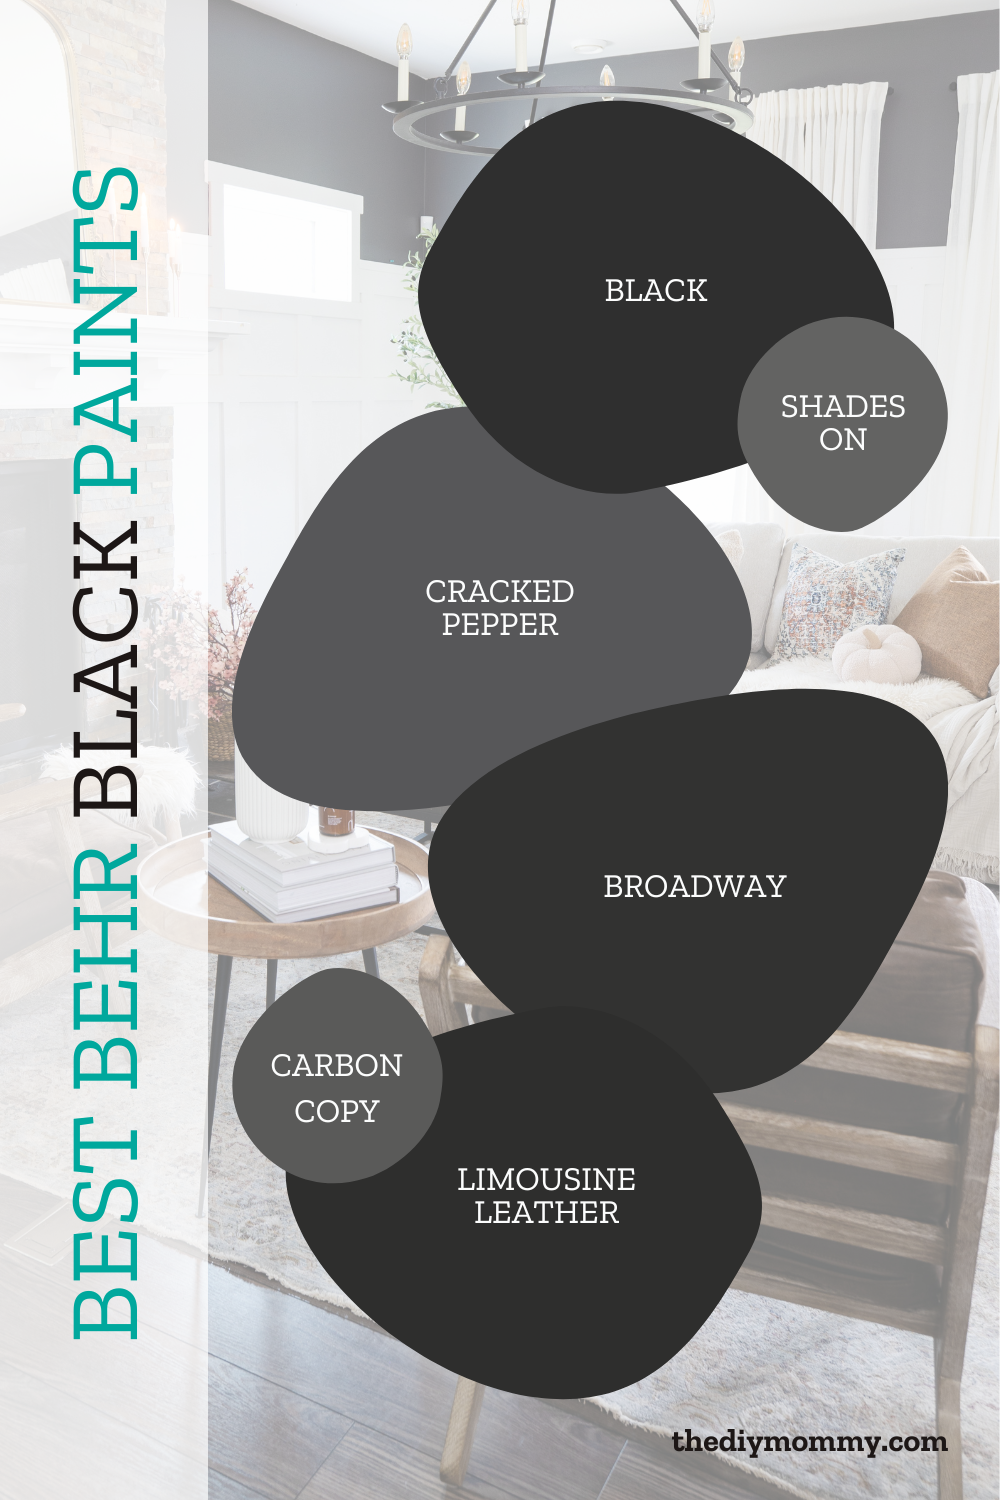 Best Behr Black Paint - how to choose!